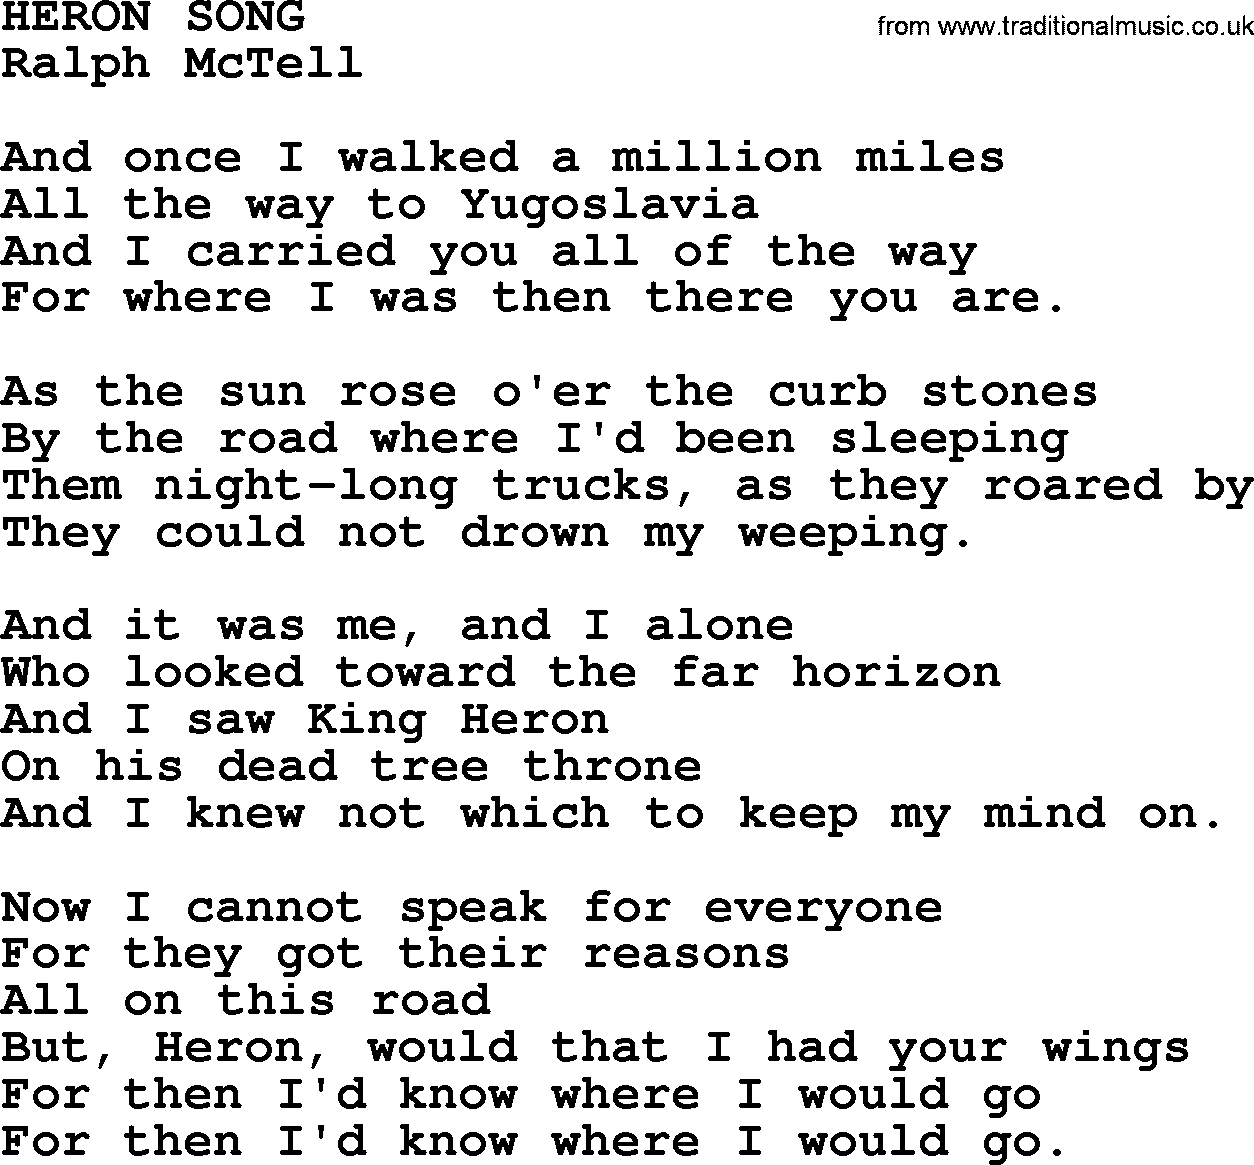 Ralph McTell Song: Heron Song, lyrics